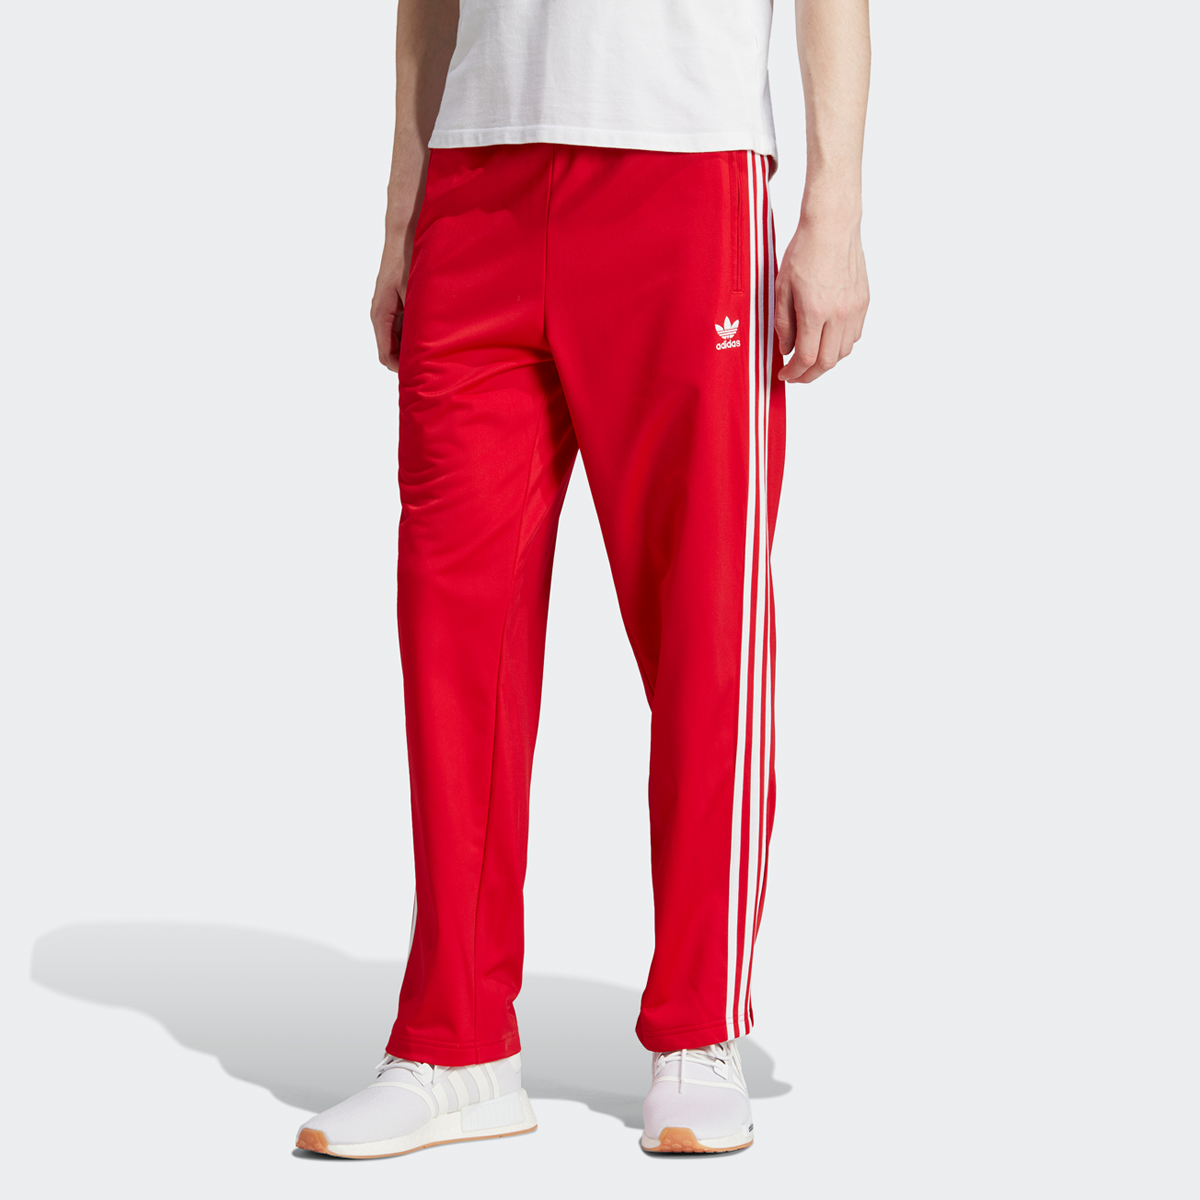 Pantalon de Survêtement adicolor Firebird, adidas Originals, Apparel, better scarlet/white, taille: XL